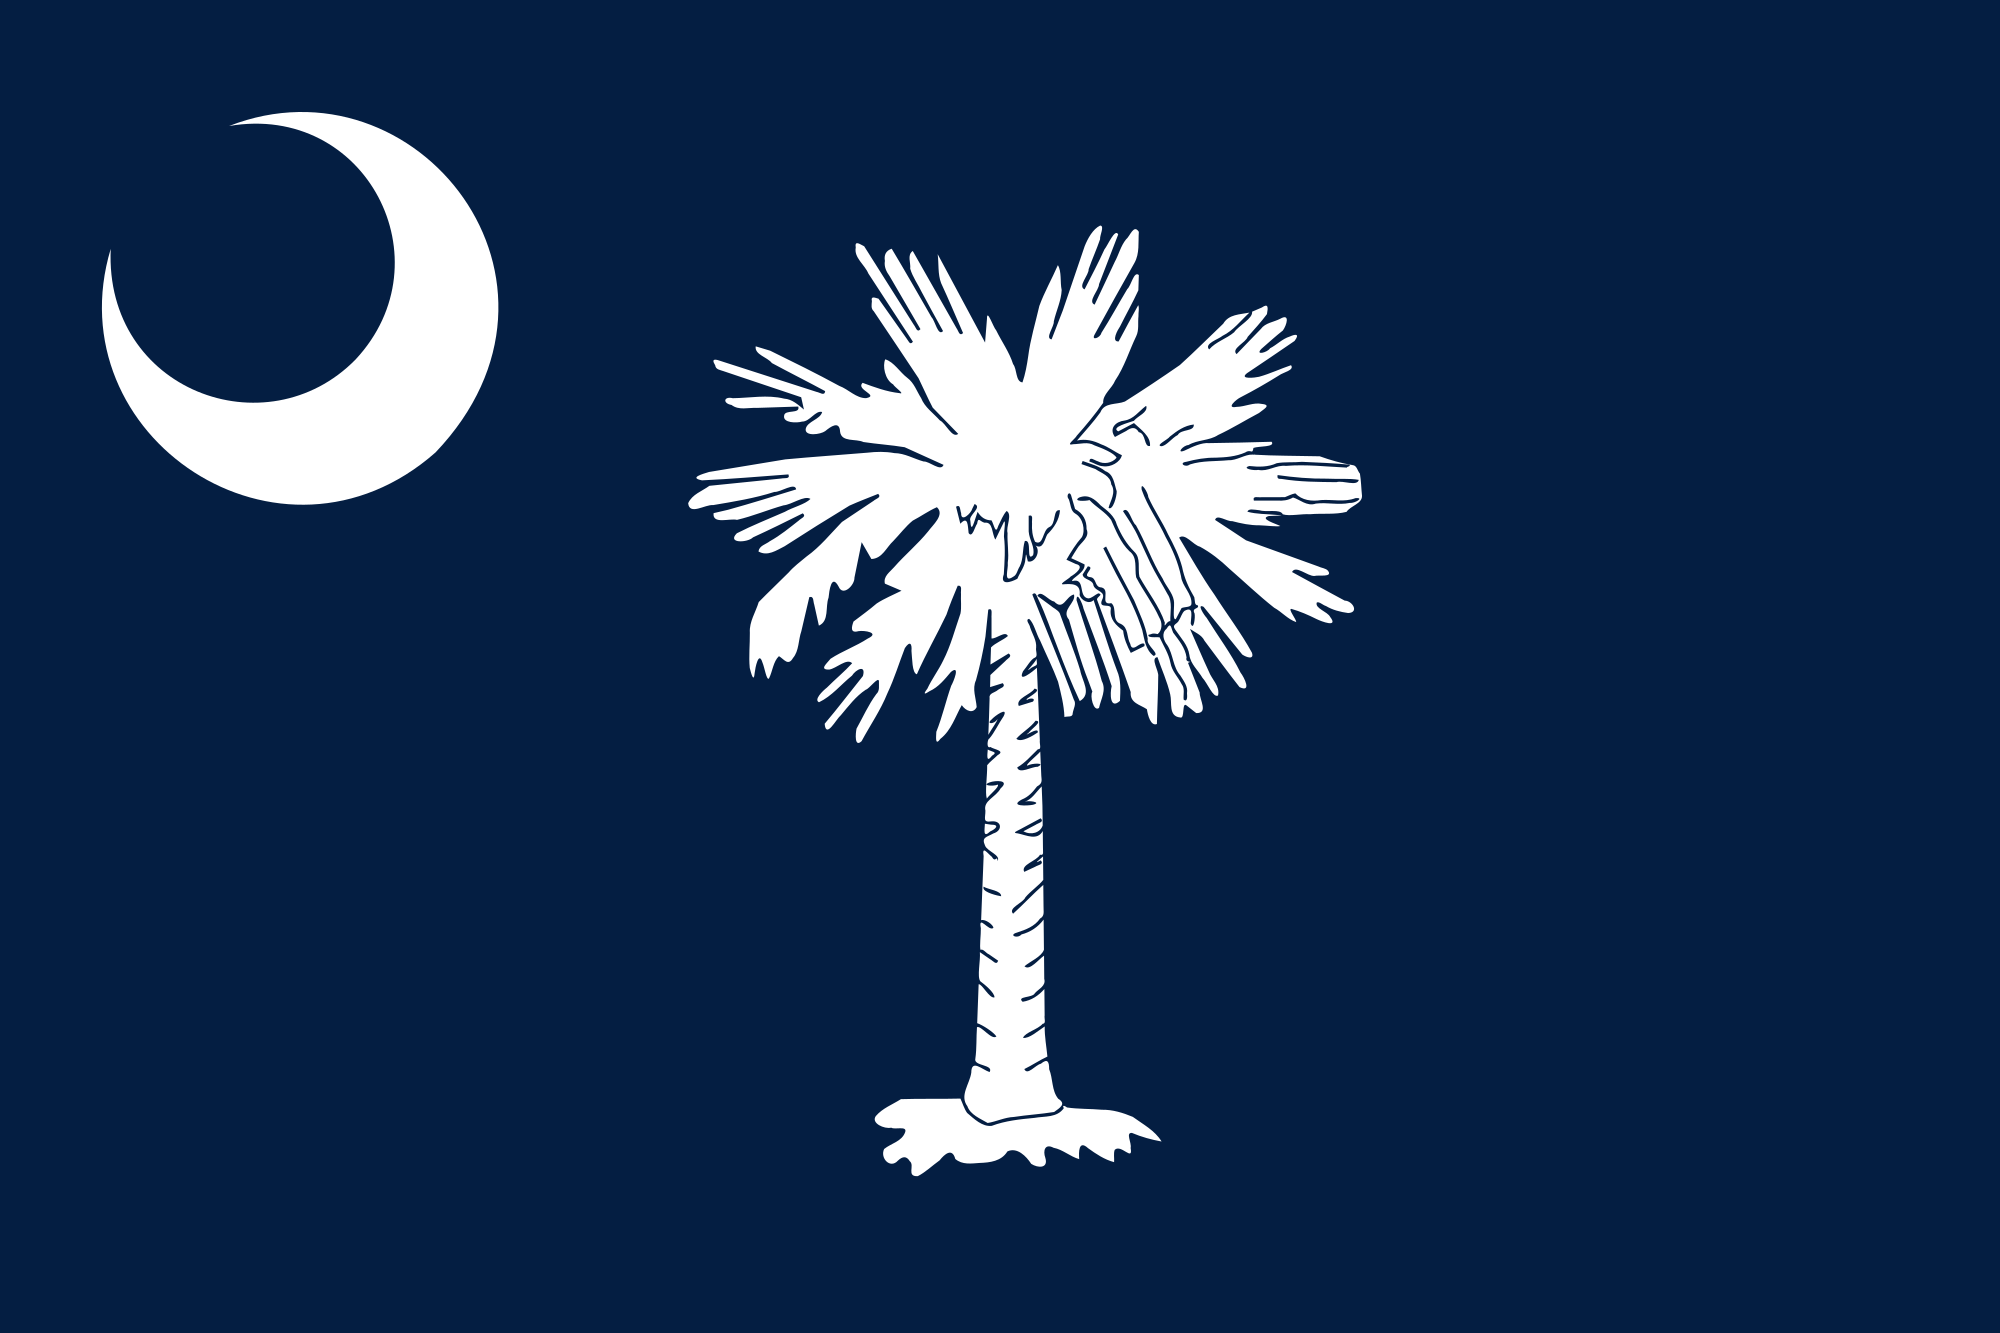 South Carolinas delstatsflagga